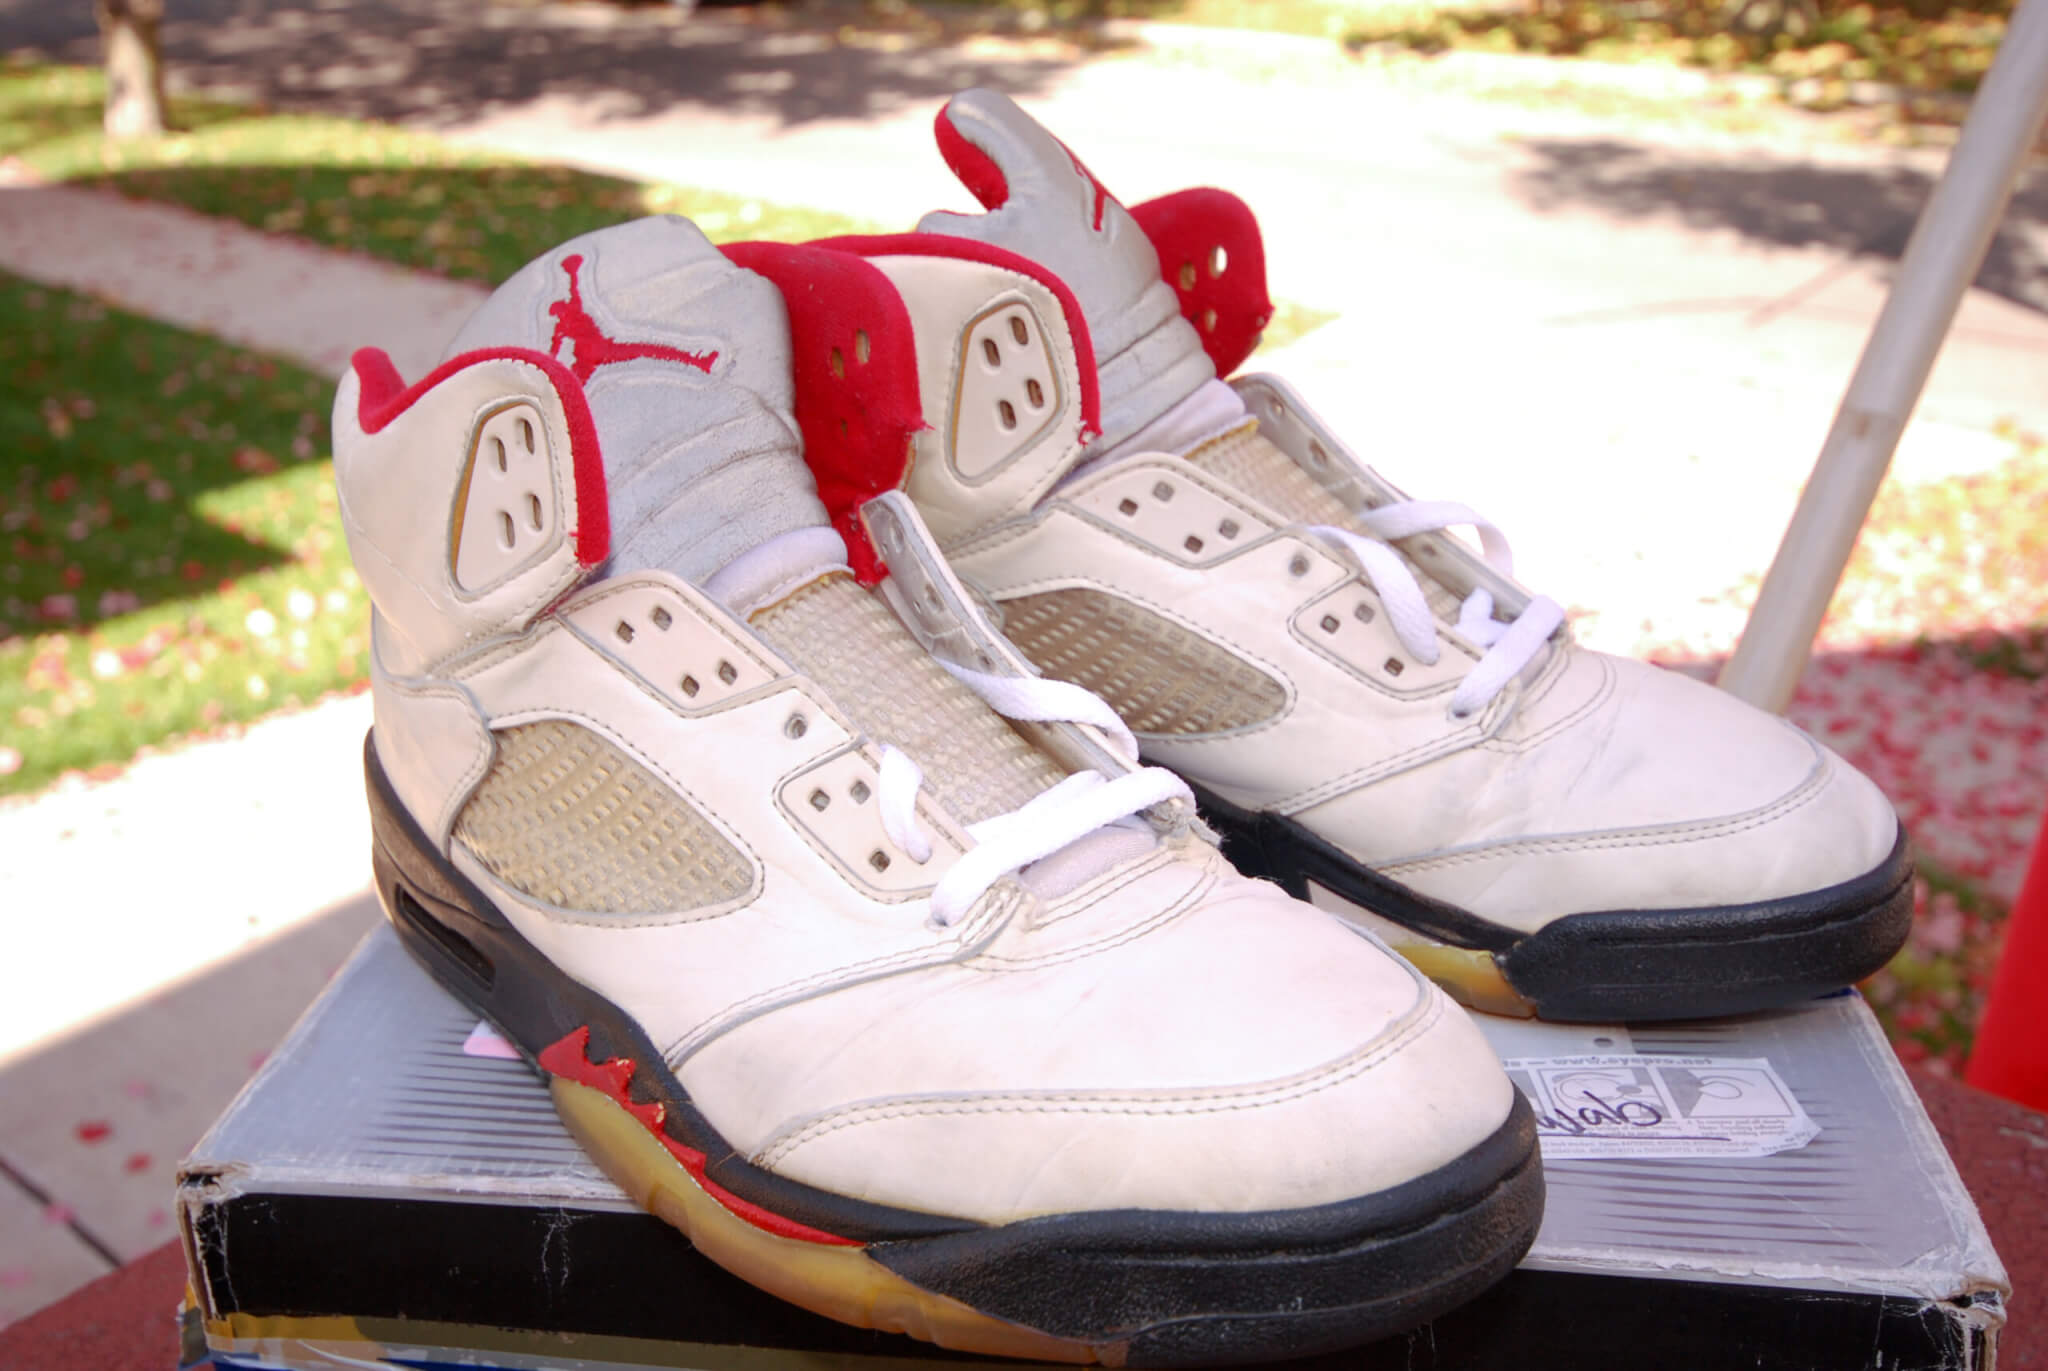 The 15 Best Air Jordan Sneakers of All Time